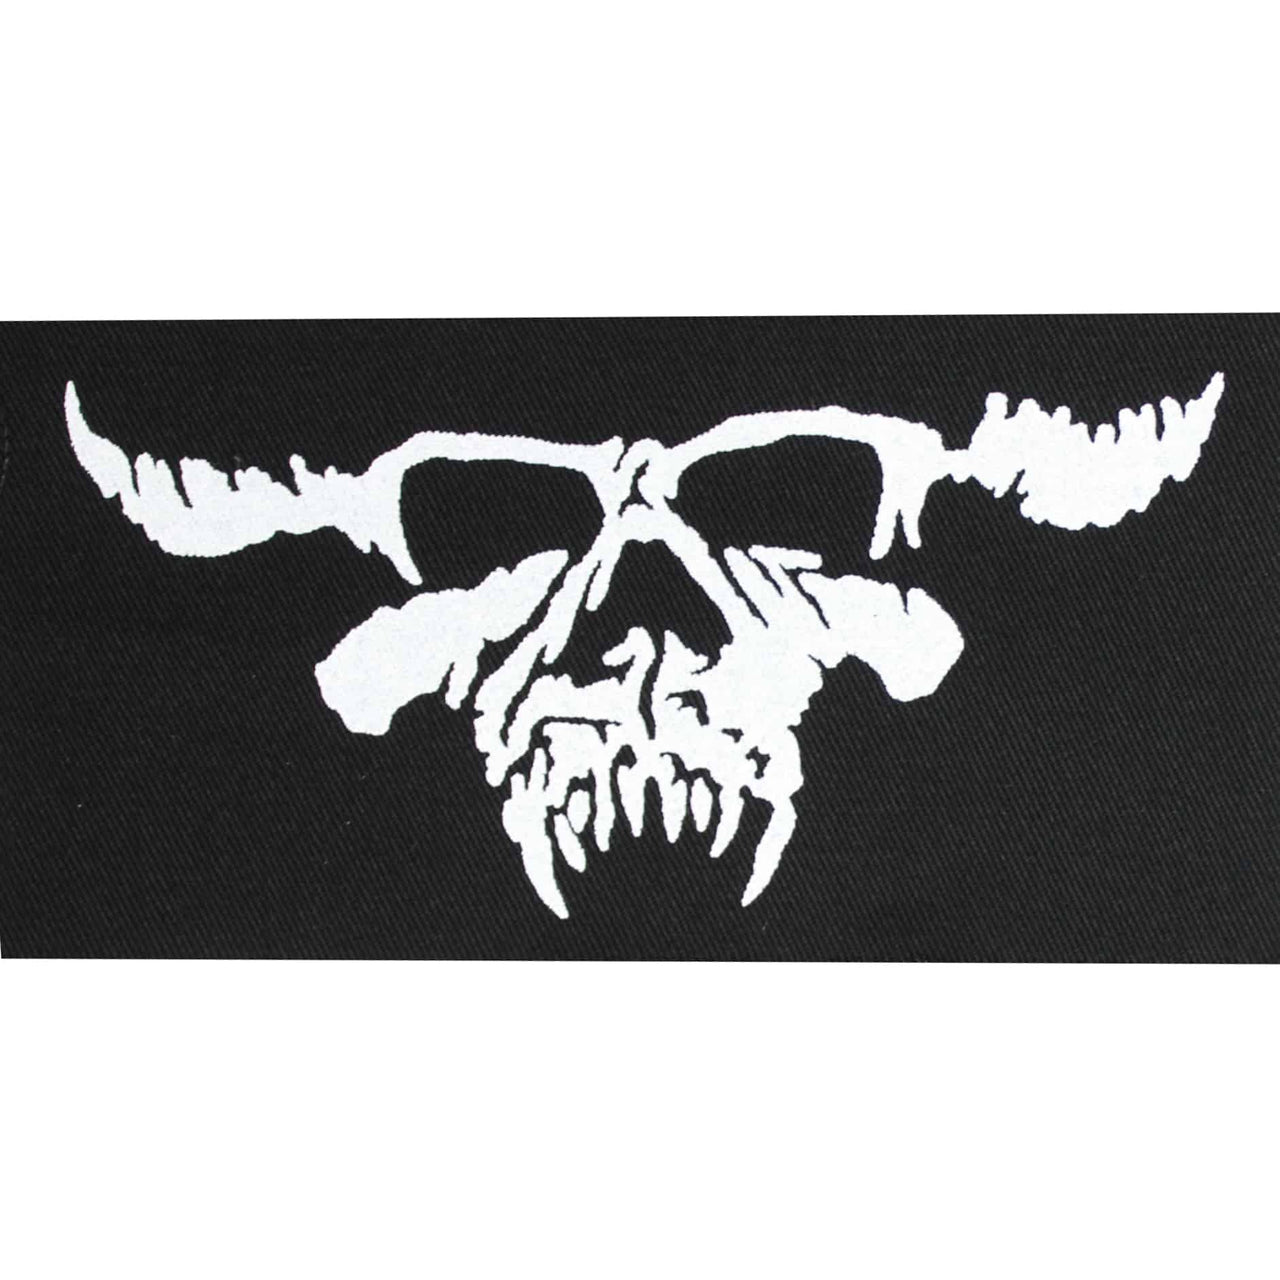 Danzig Skull Cloth Patch